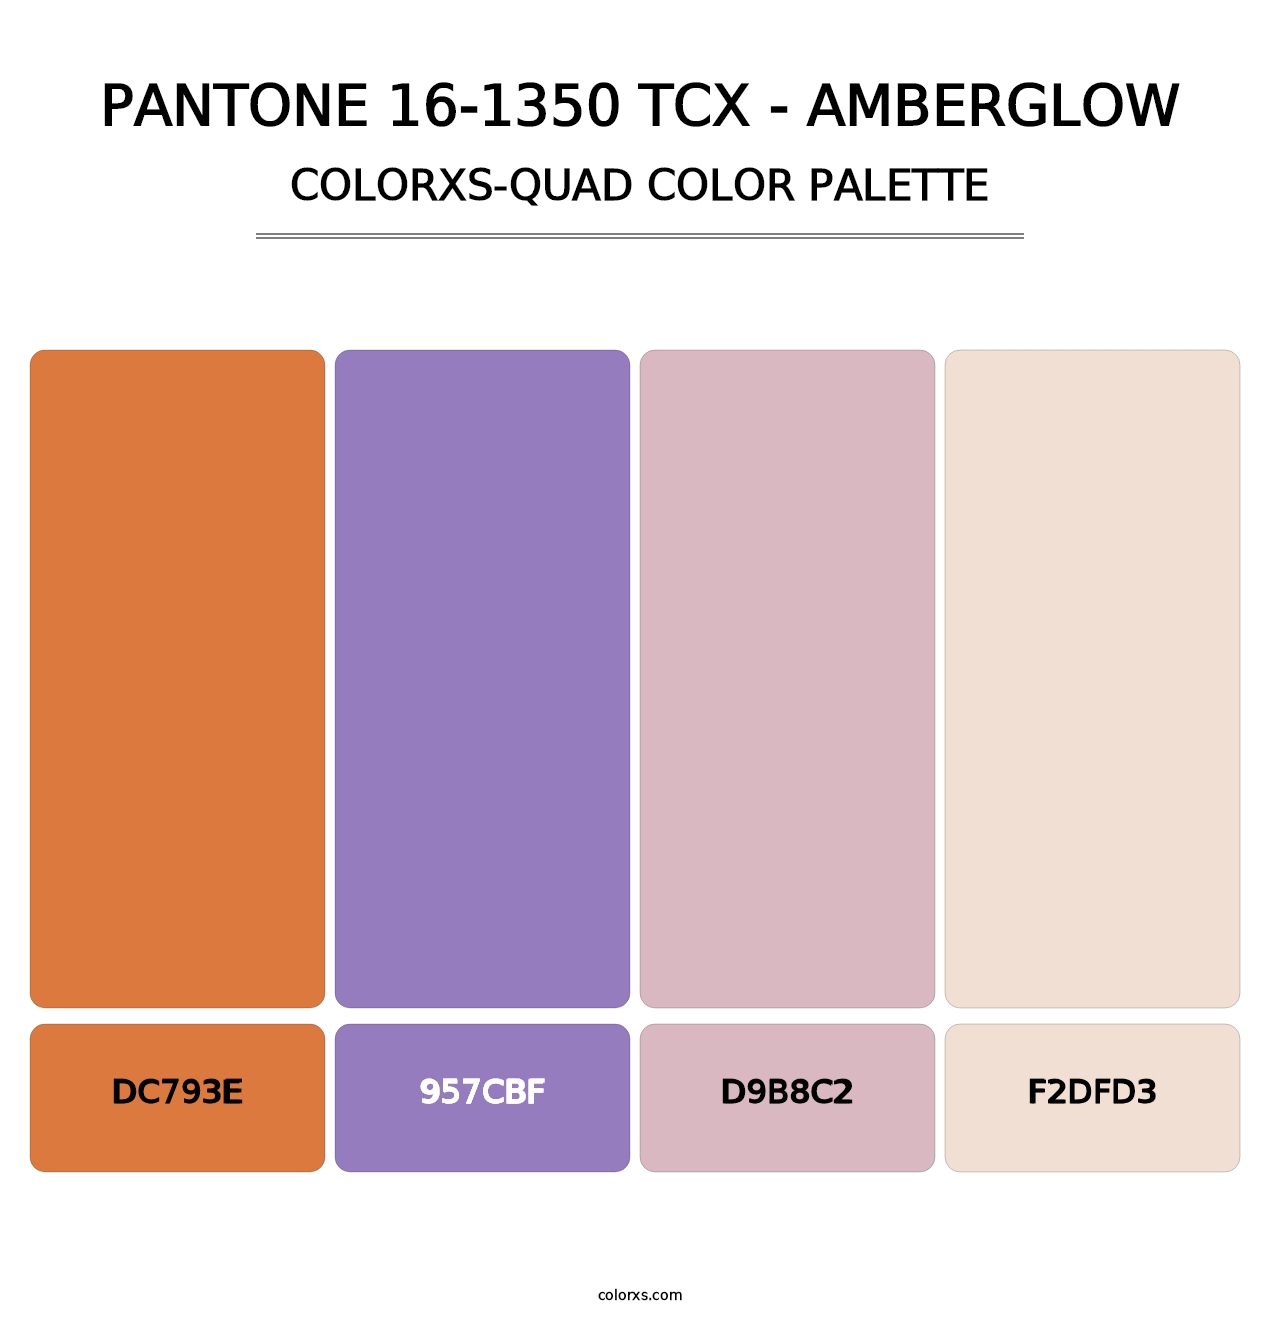 PANTONE 16-1350 TCX - Amberglow - Colorxs Quad Palette